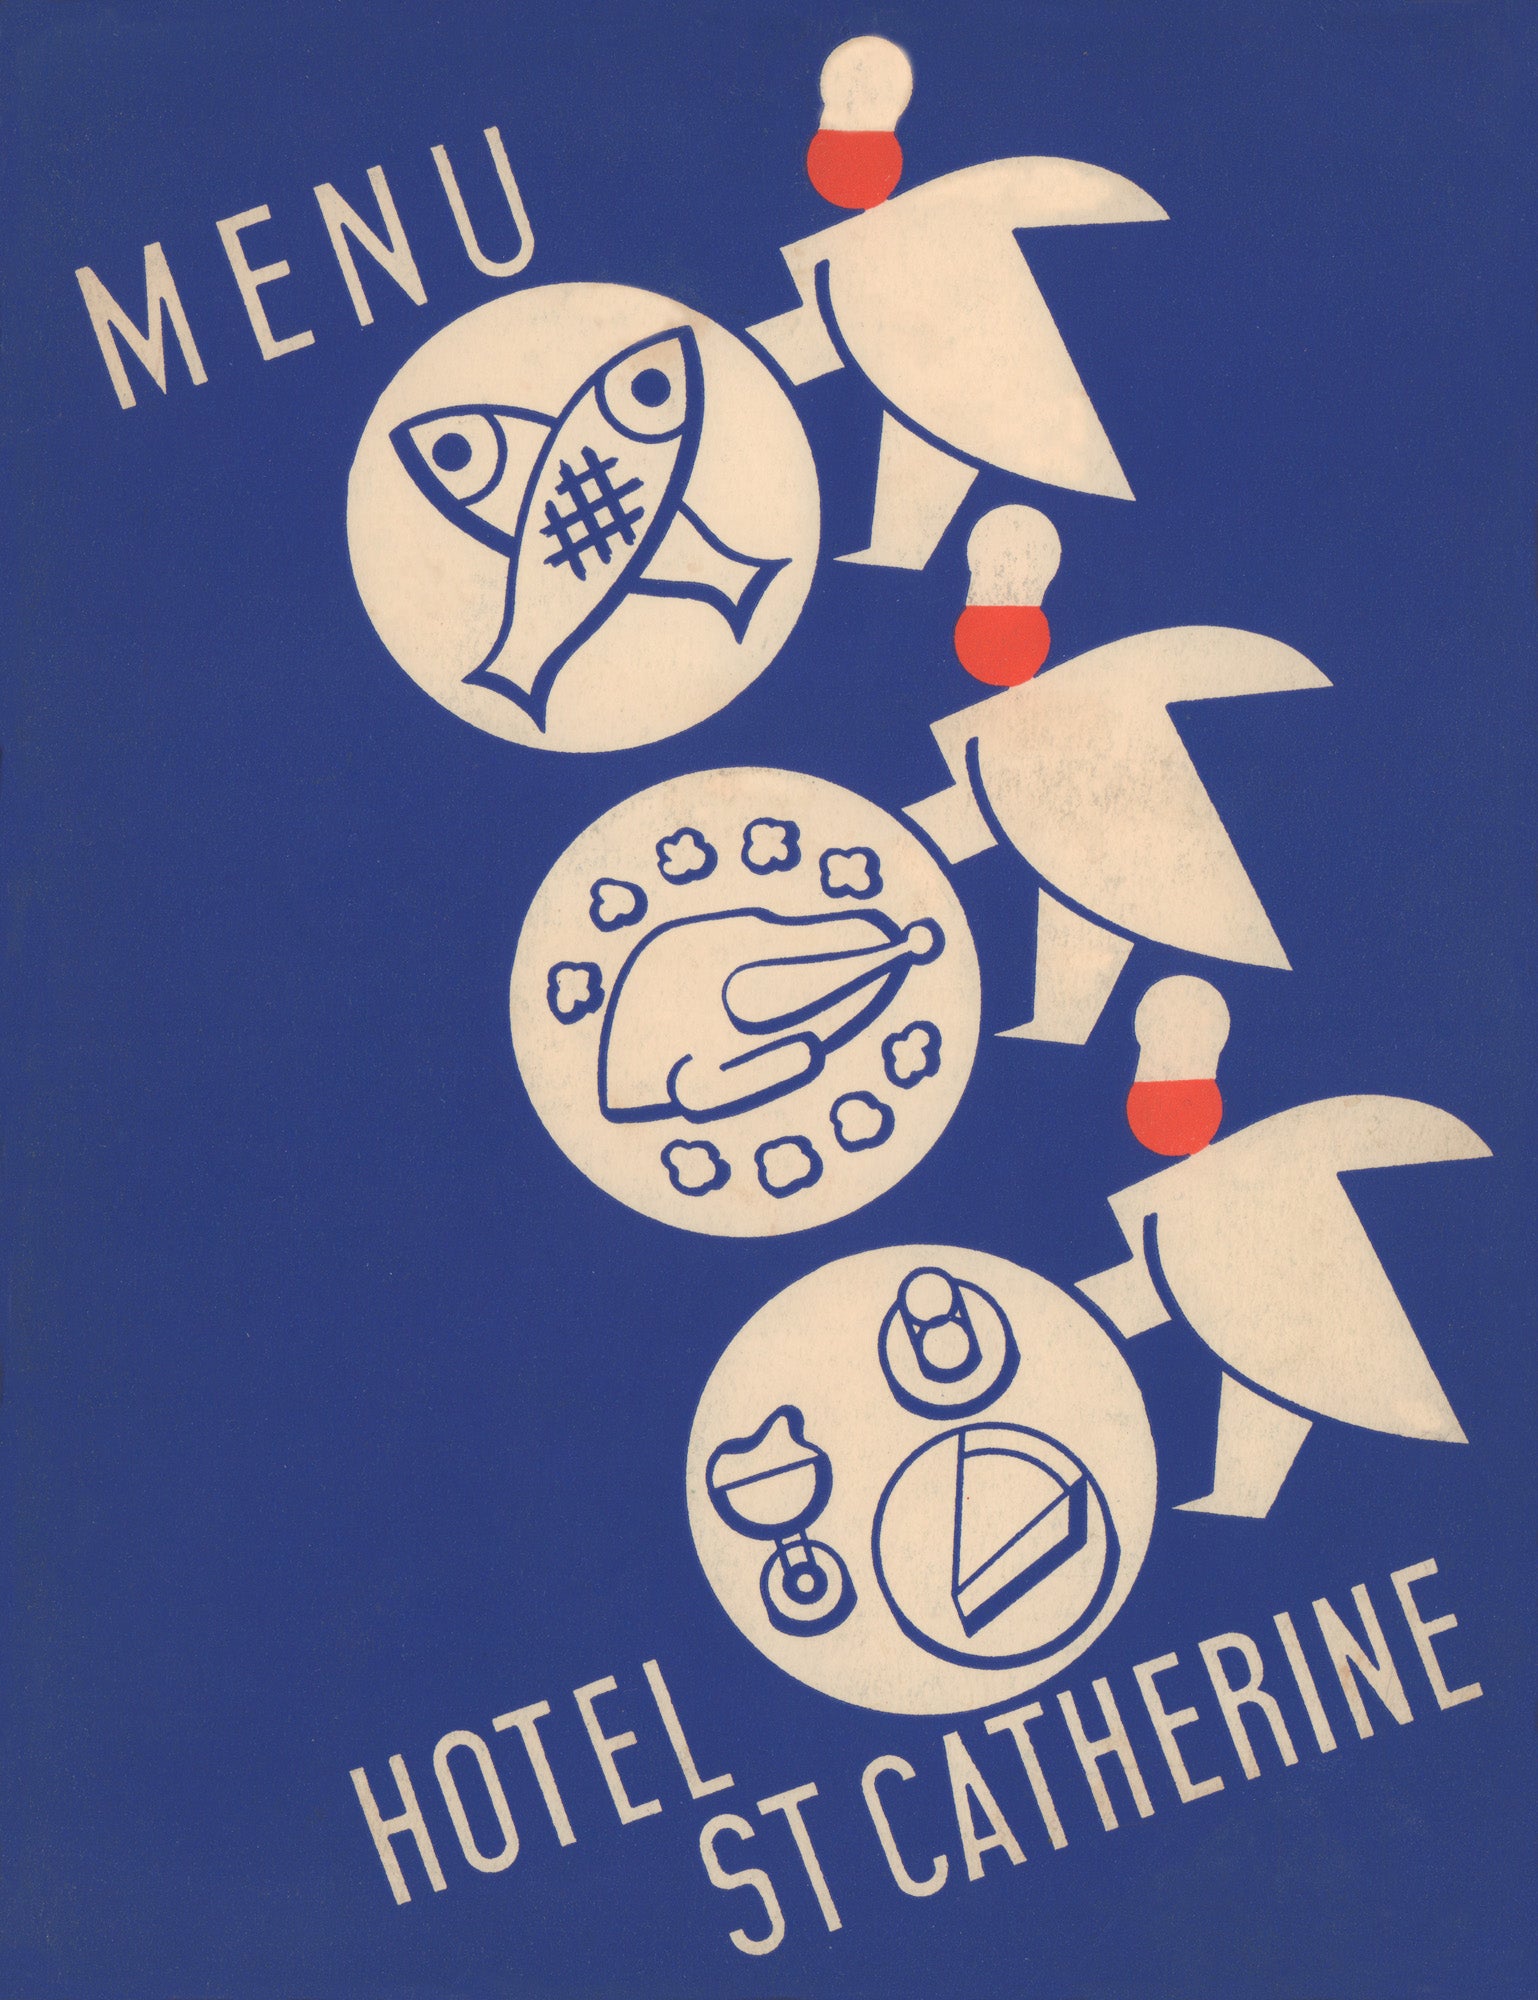 St Catherine's Hotel, Catalina 1939 | Vintage Menu Art - cover